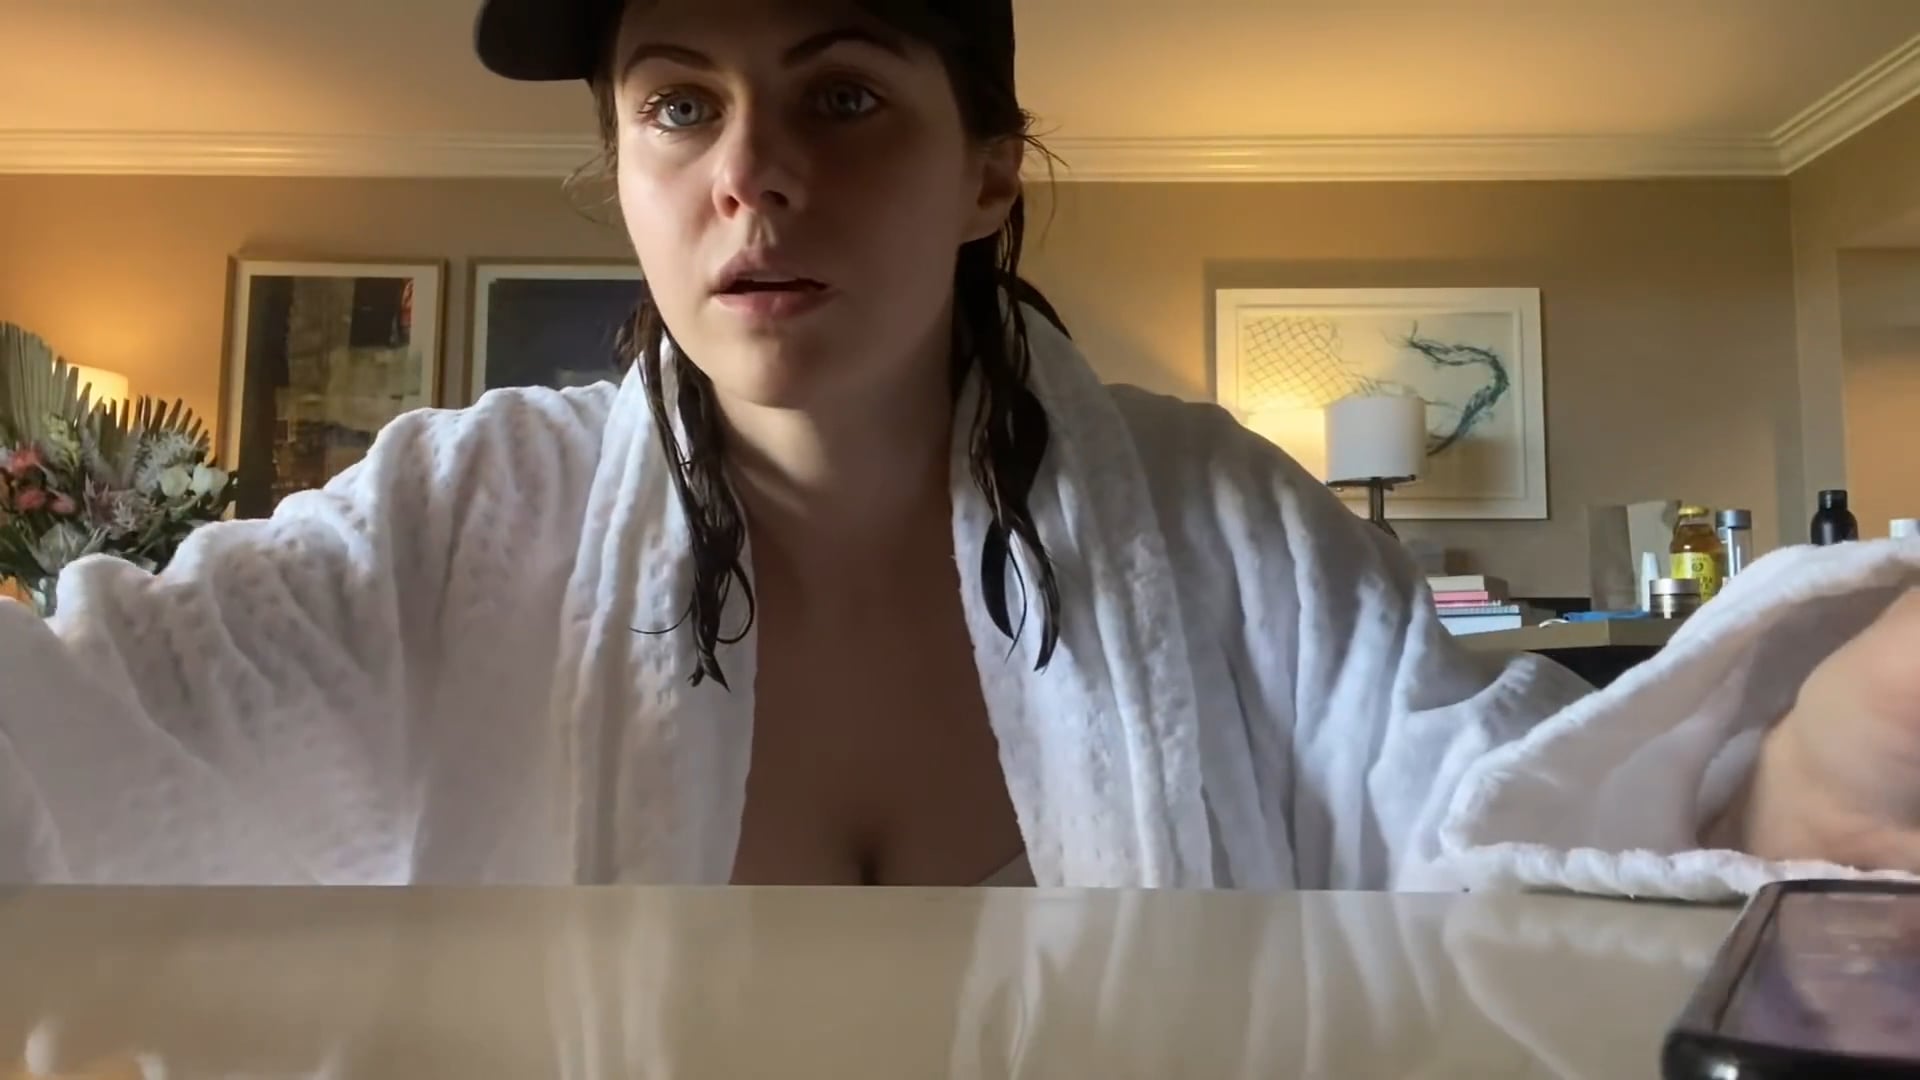 Alexandra Daddario in bikini & robe in YouTube video